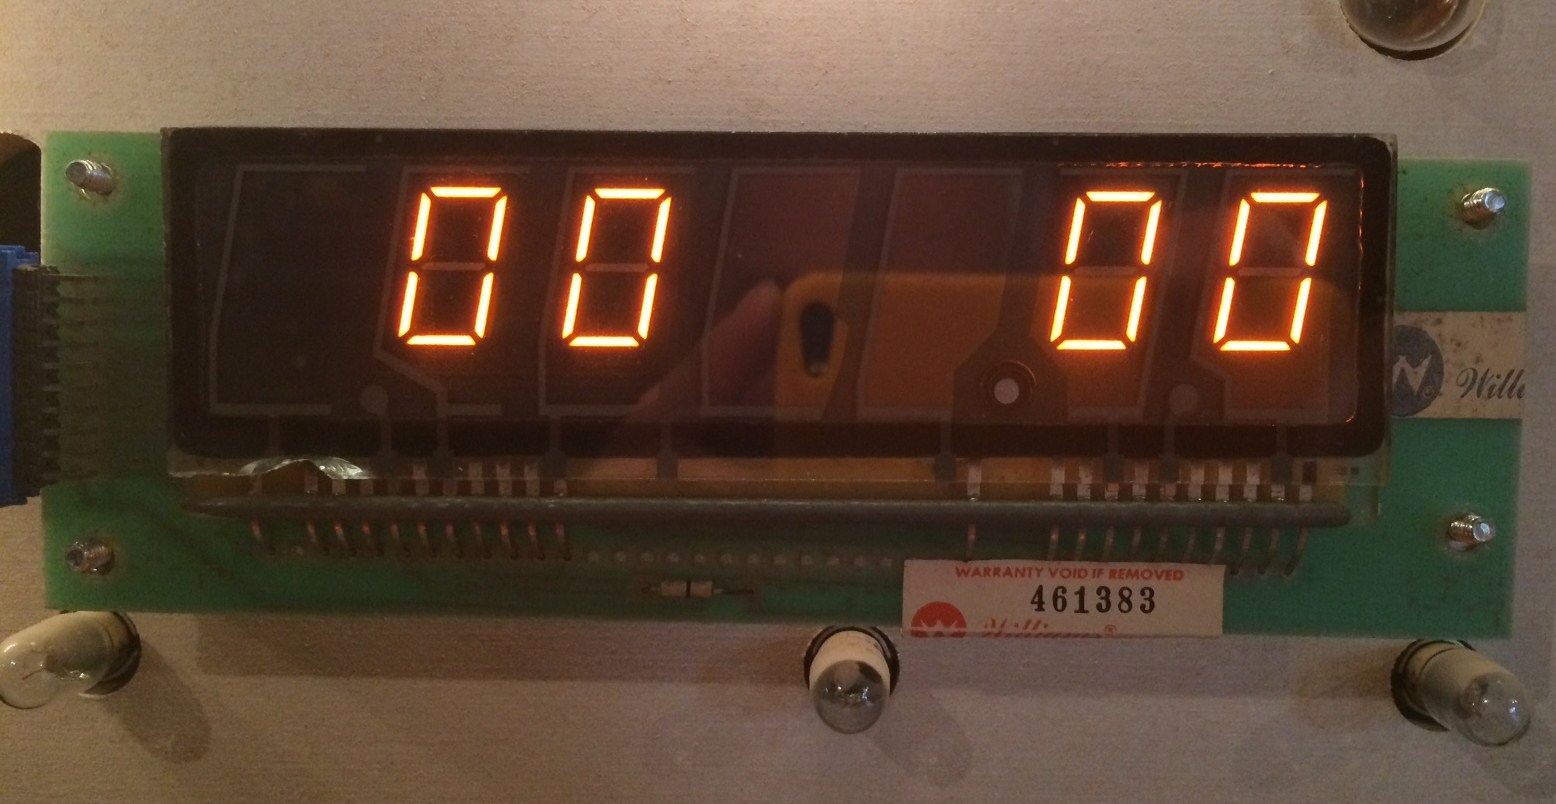 4DigitDisplay0253 - Williams 4-digit display board